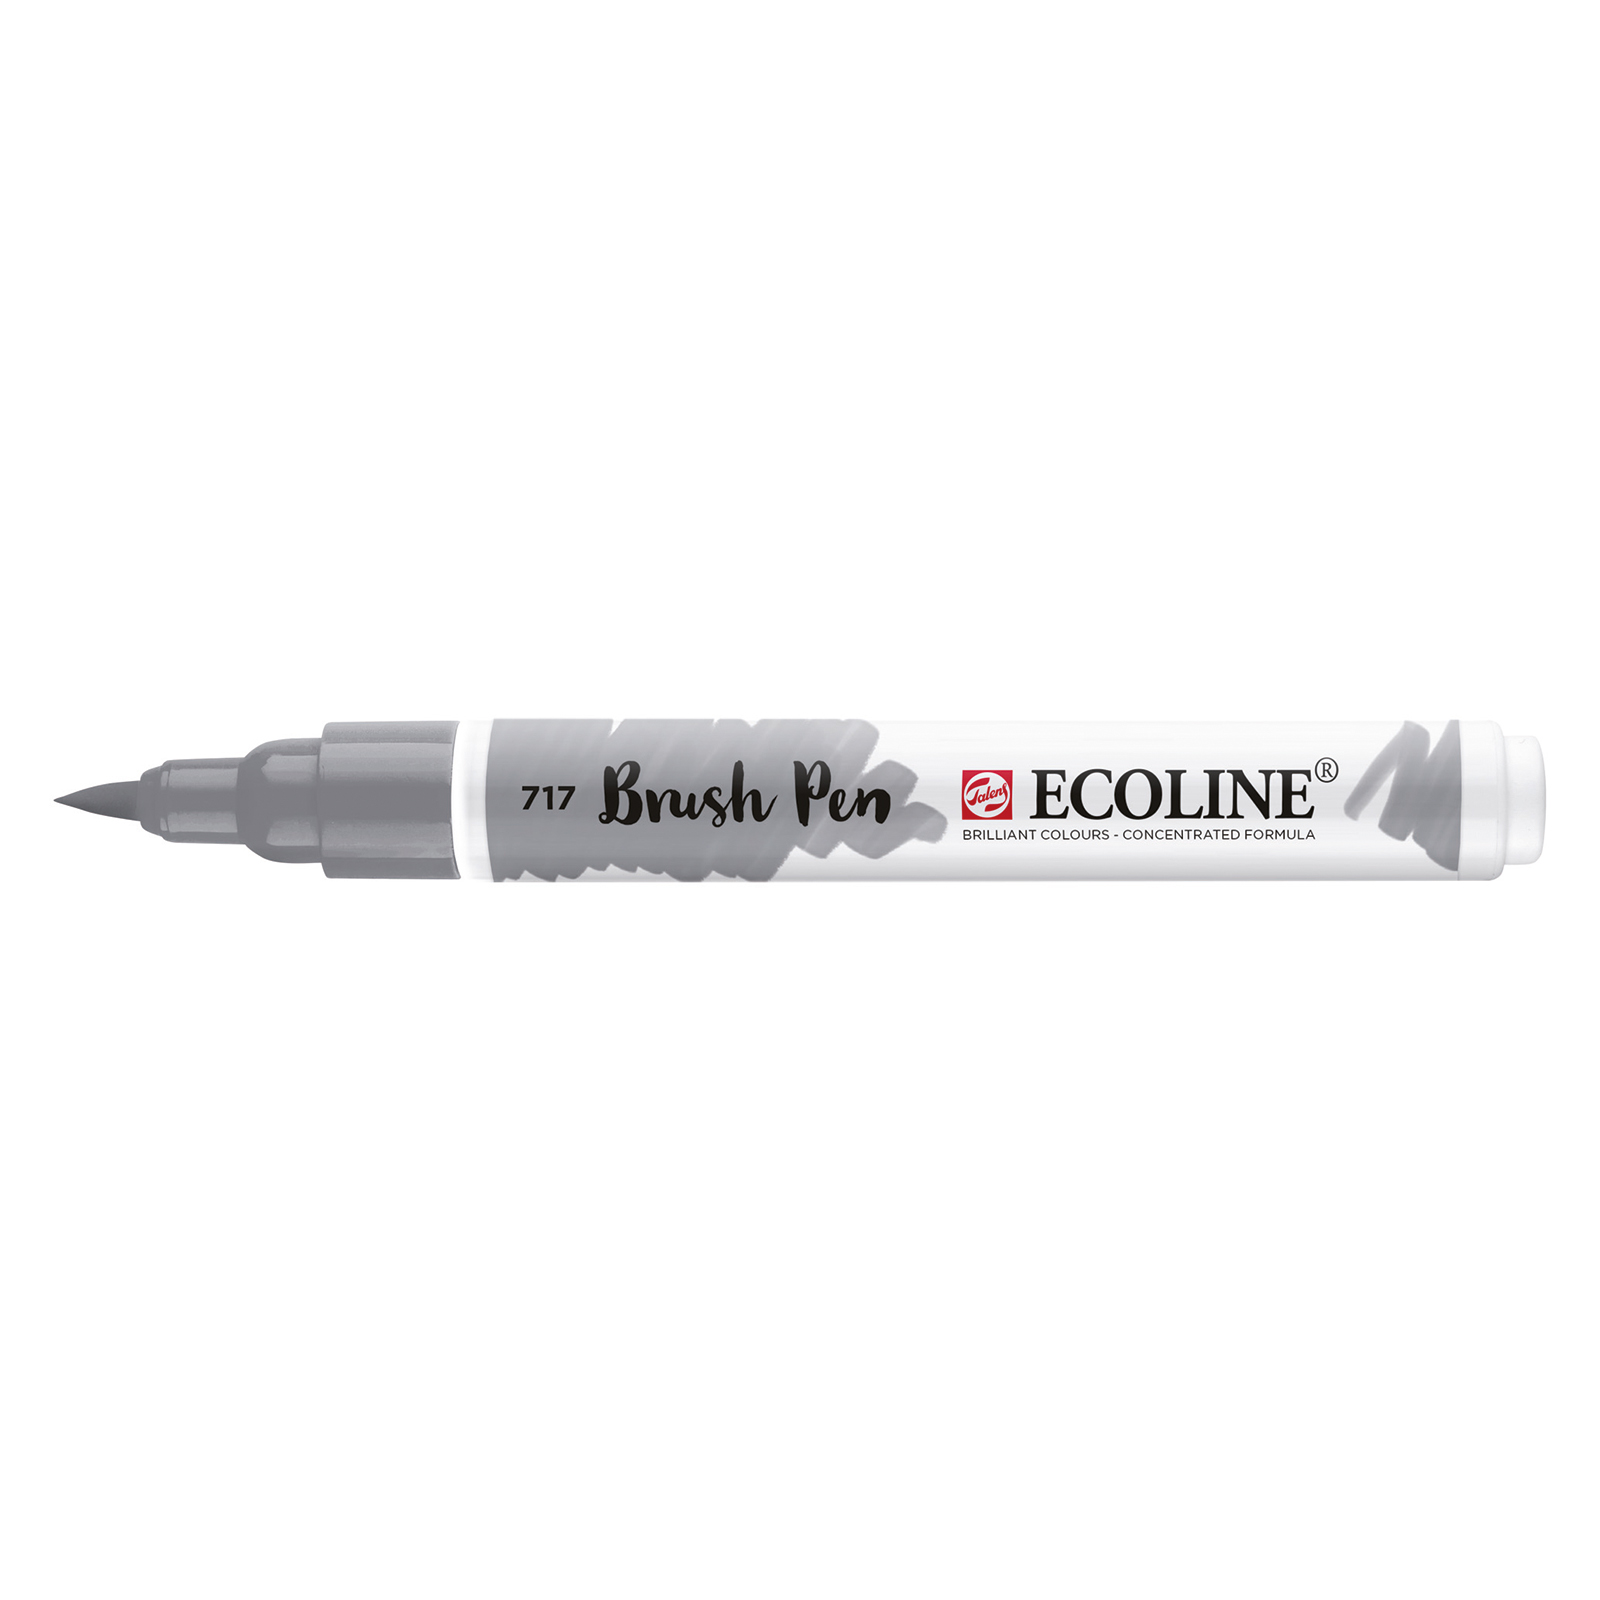 Ecoline • Brush Pen Kaltgrau 717